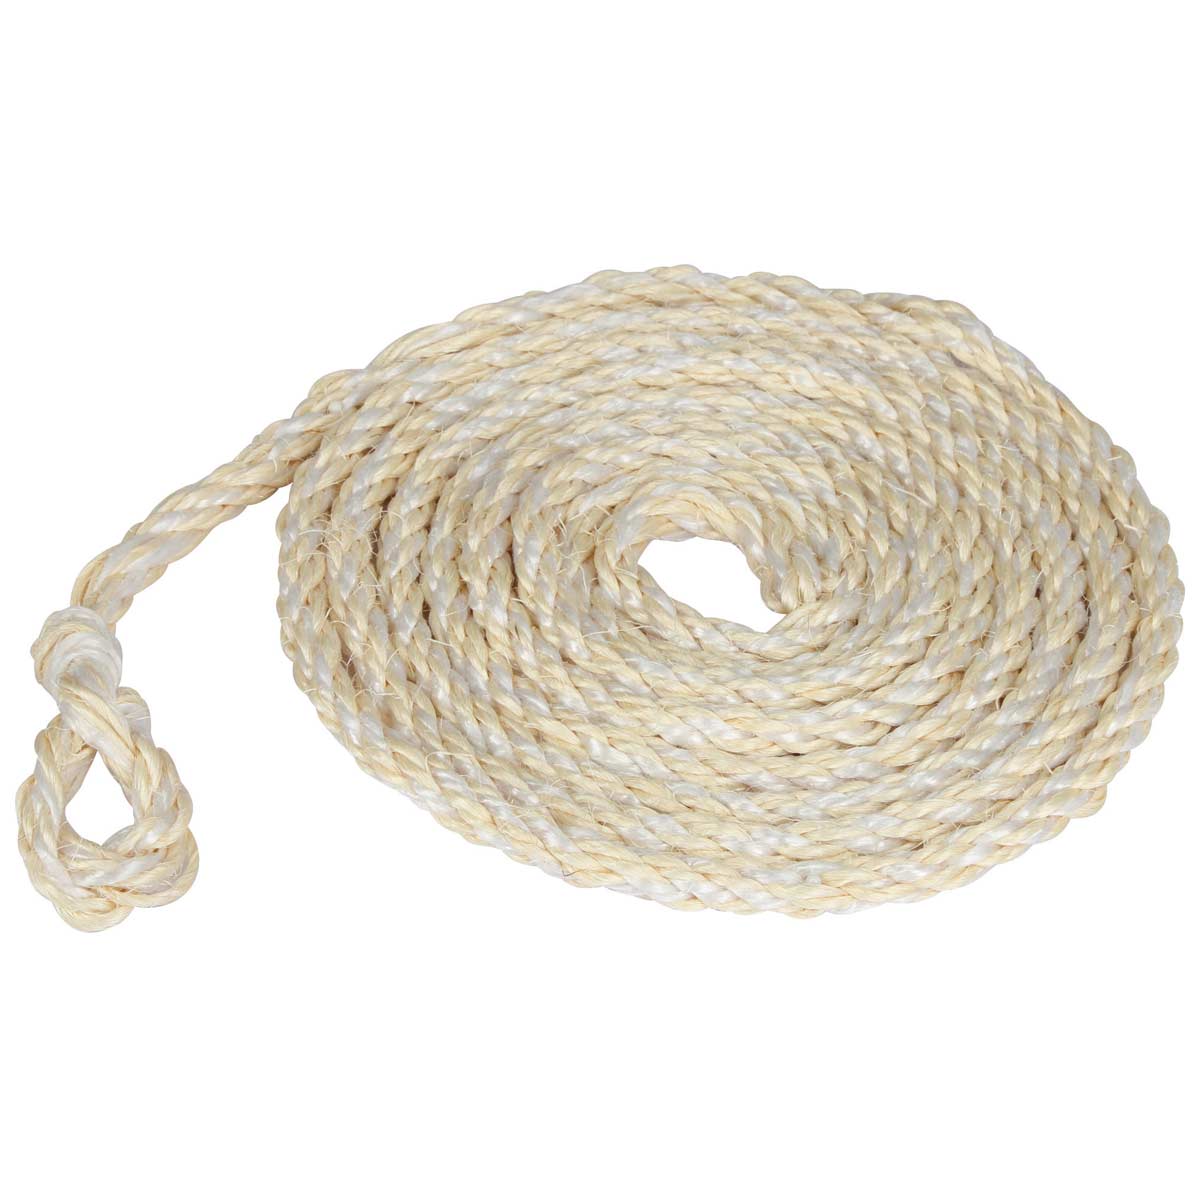 Livestock transport rope 320 cm